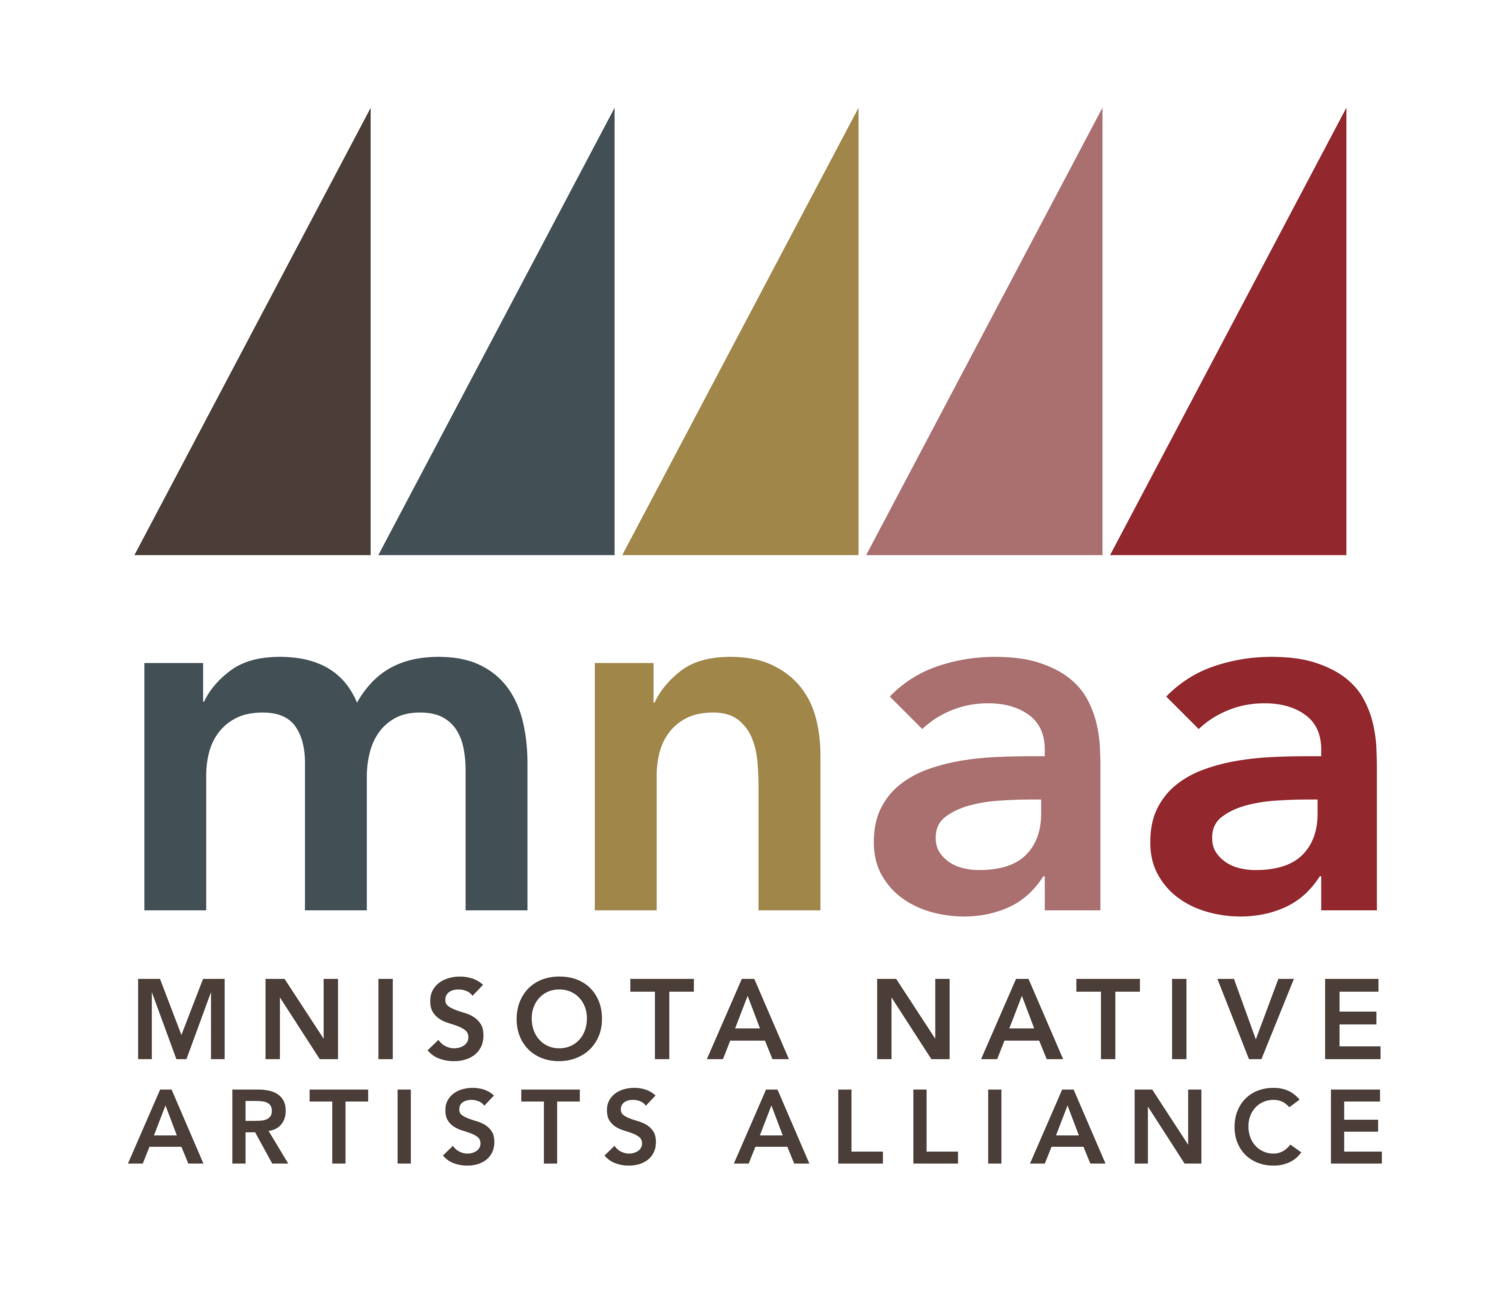 Mni Sota Native Arts Alliance